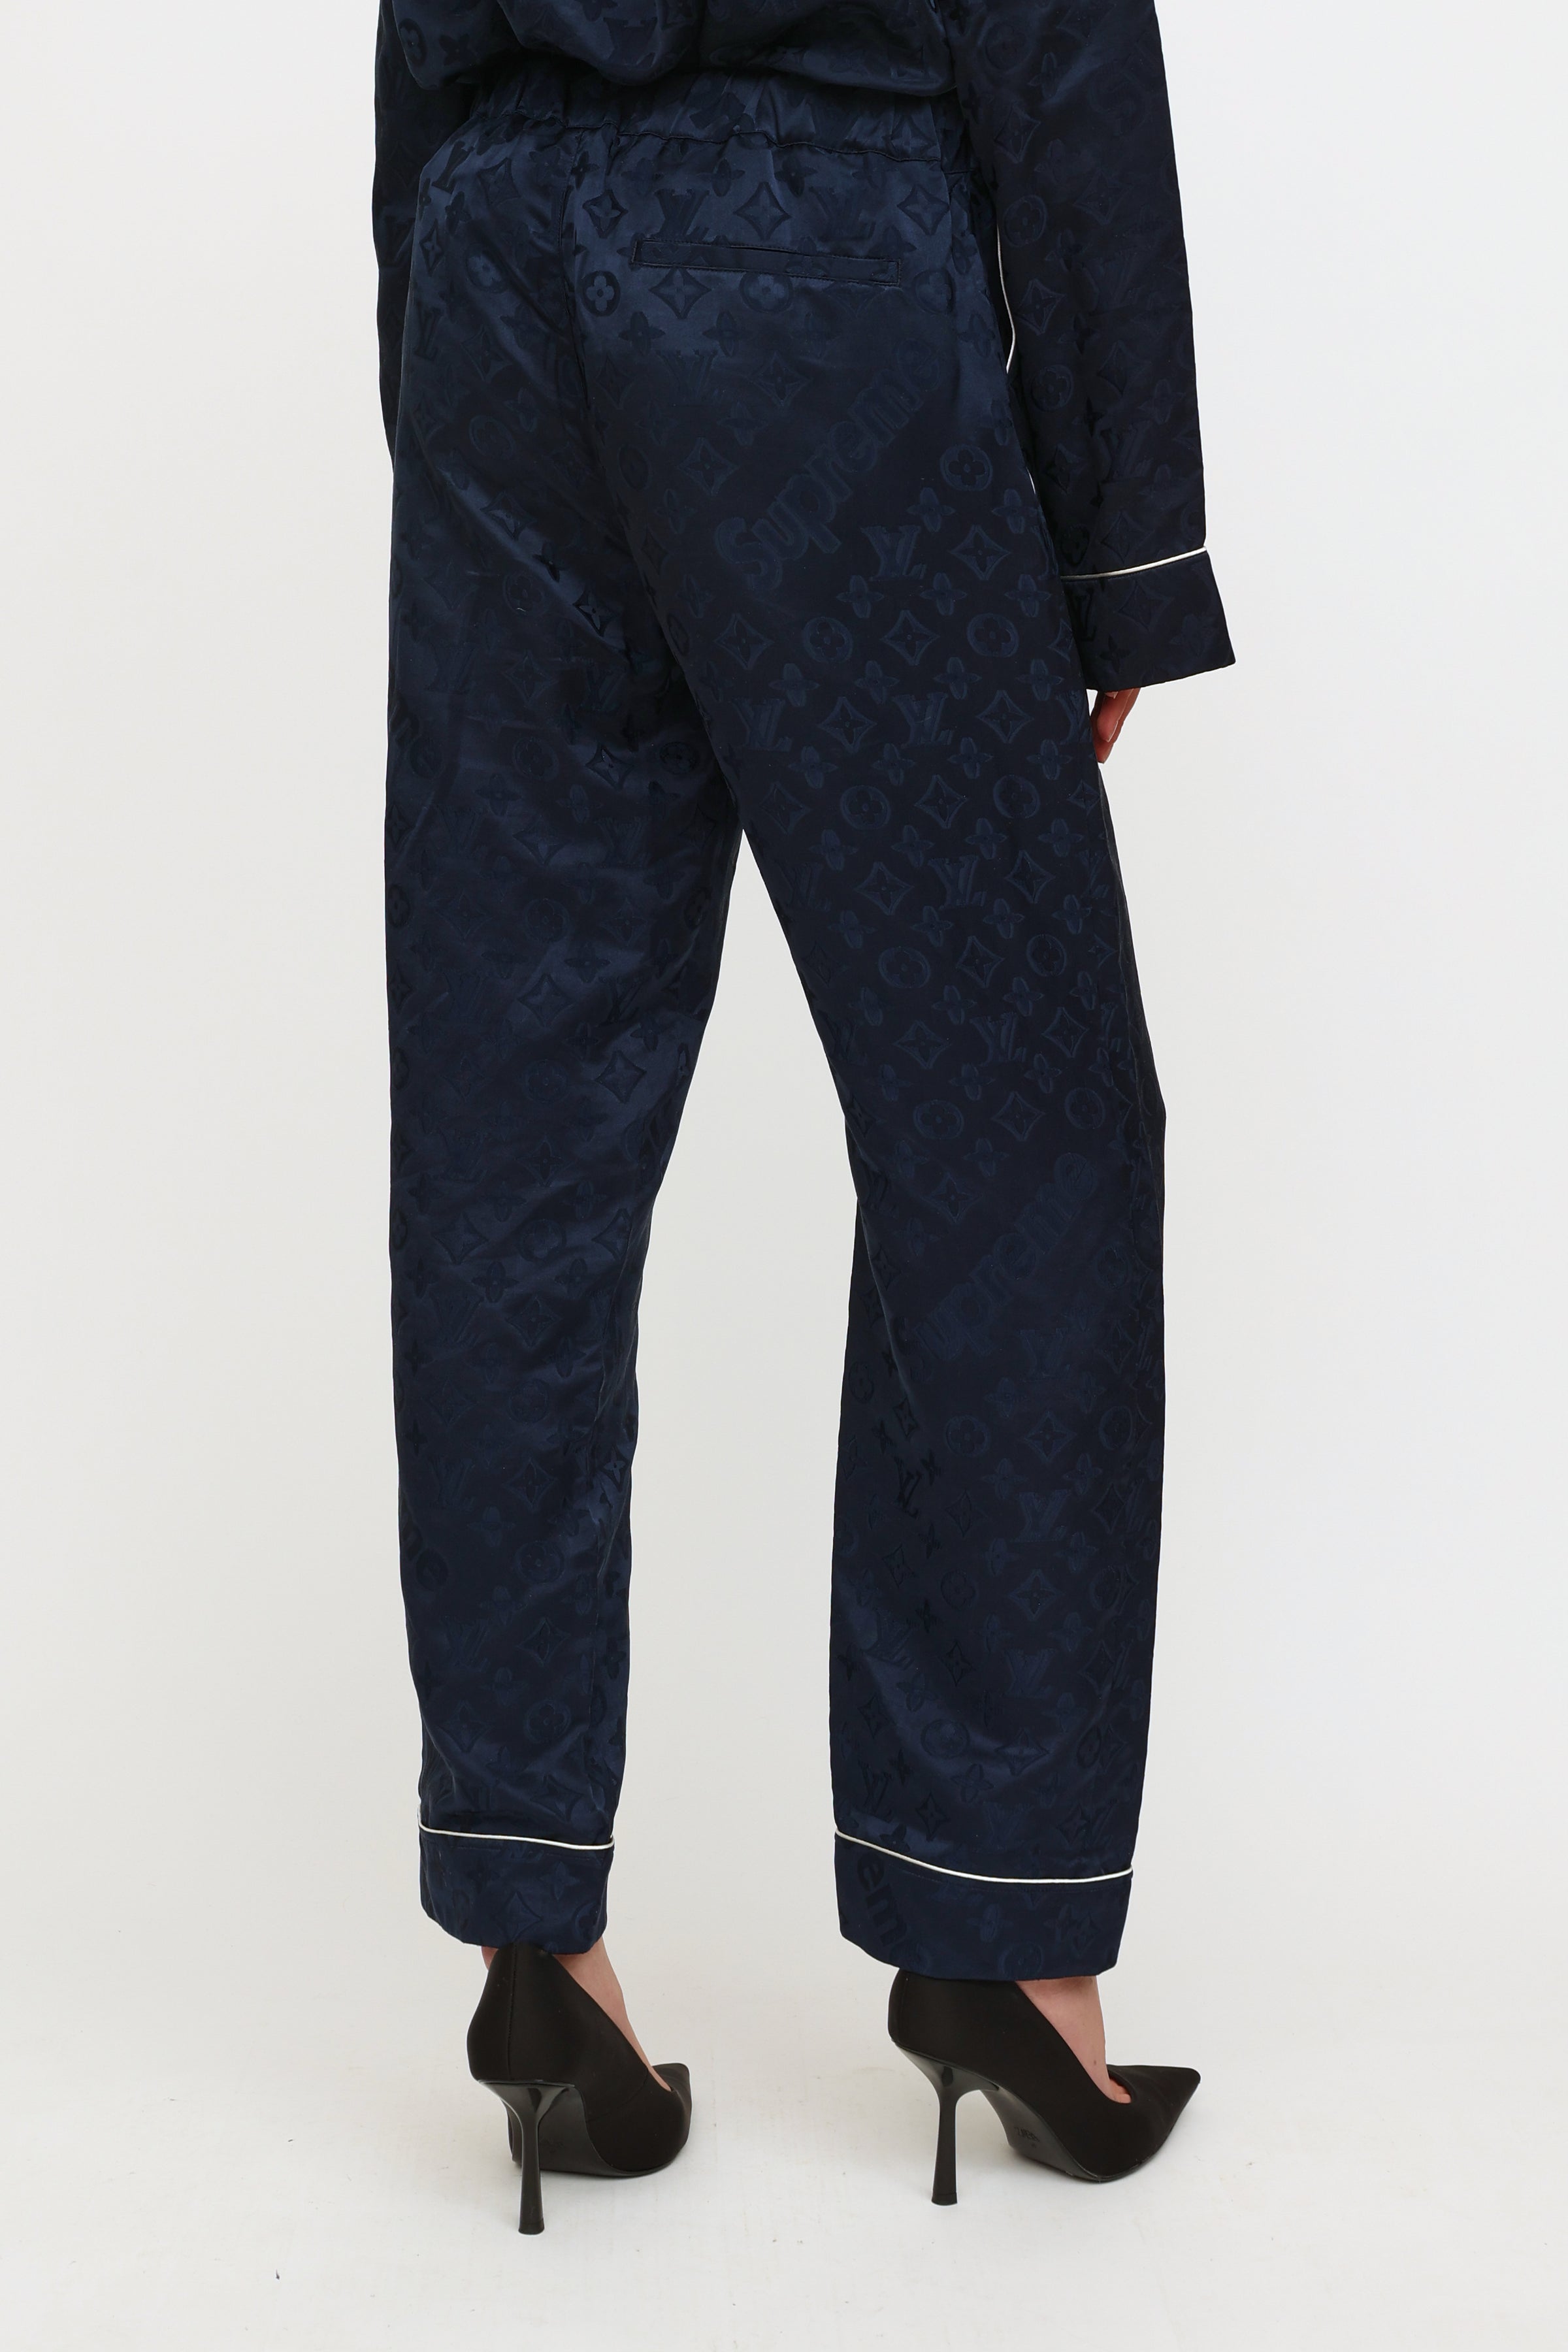 Louis Vuitton Grey Monogram Silk Button Front Pajama Shirt & Pant Set M Louis  Vuitton